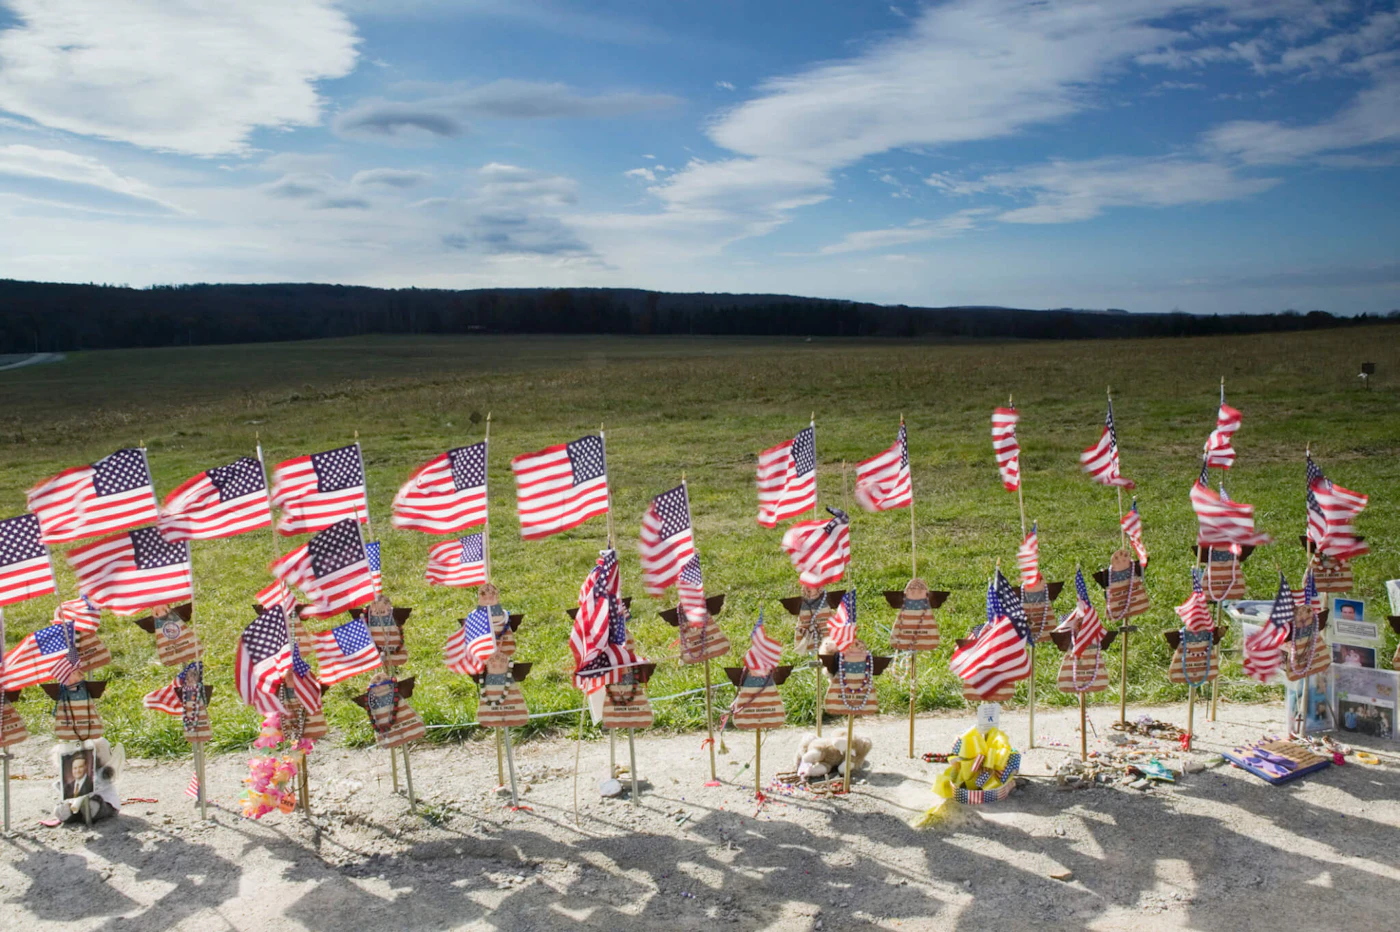 USA-Pennsylvania-Shanksville:
Flight 93 memorial- Temporary memorial to the victims of terrorist aircrash on 9/11/2001